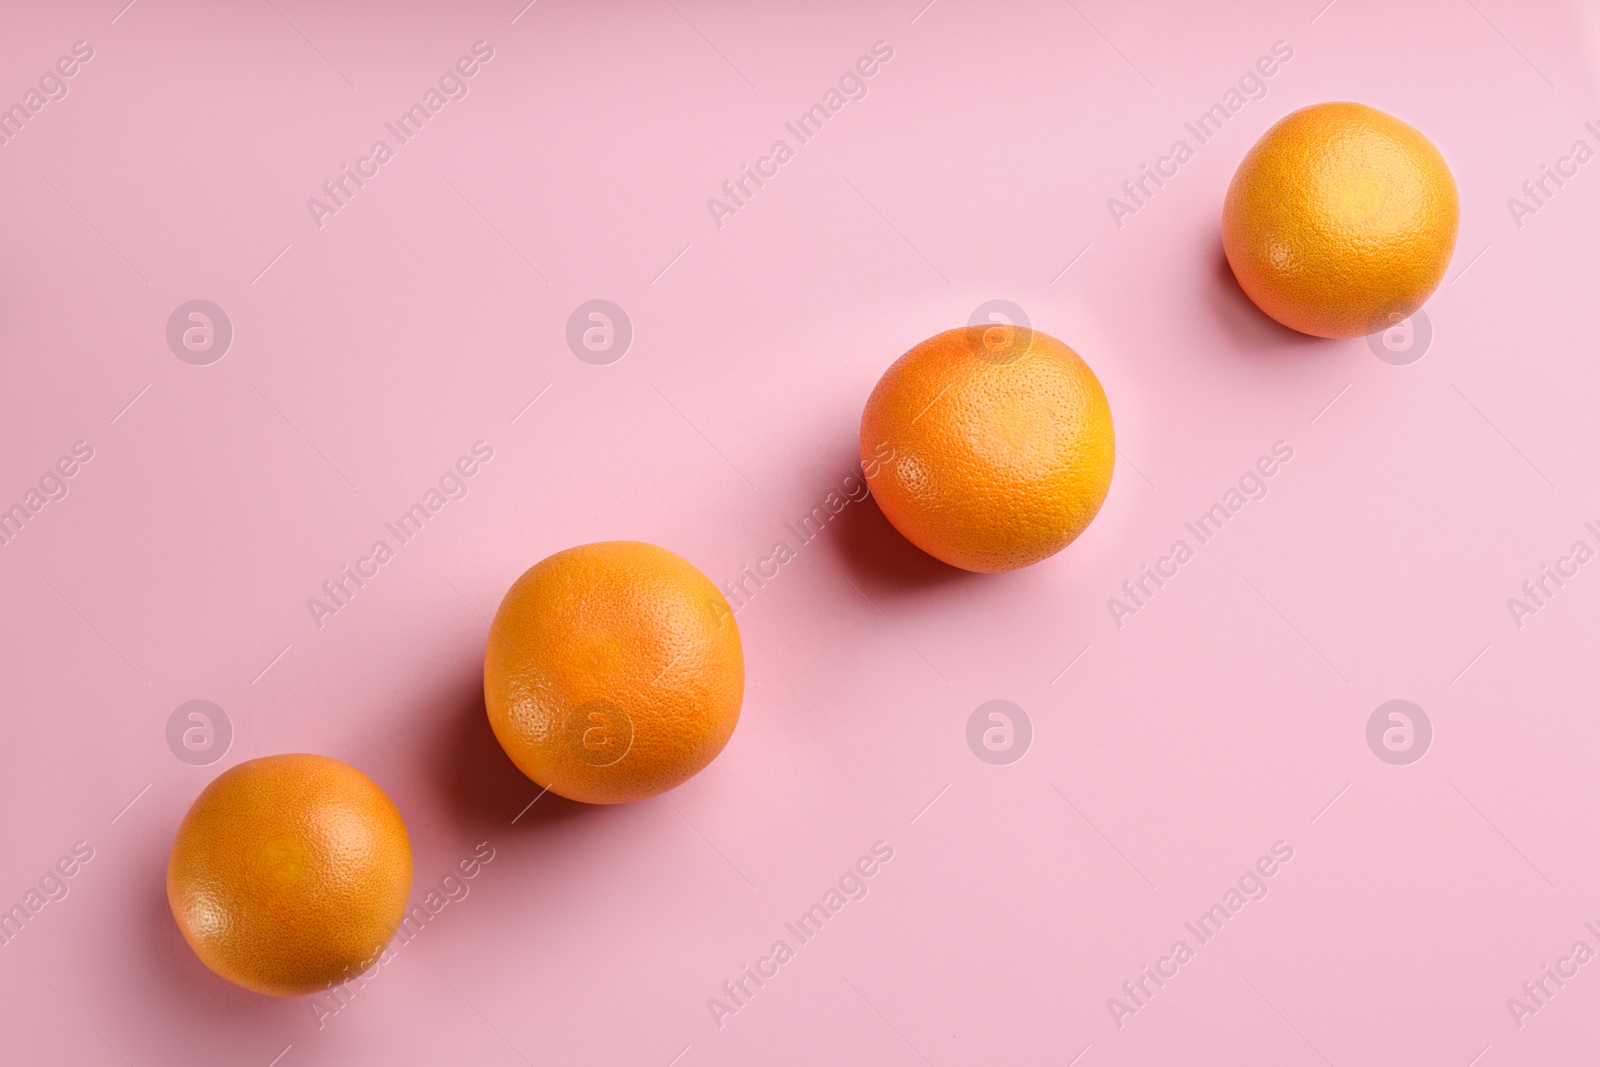 Photo of Tasty ripe grapefruits on pink background, flat lay